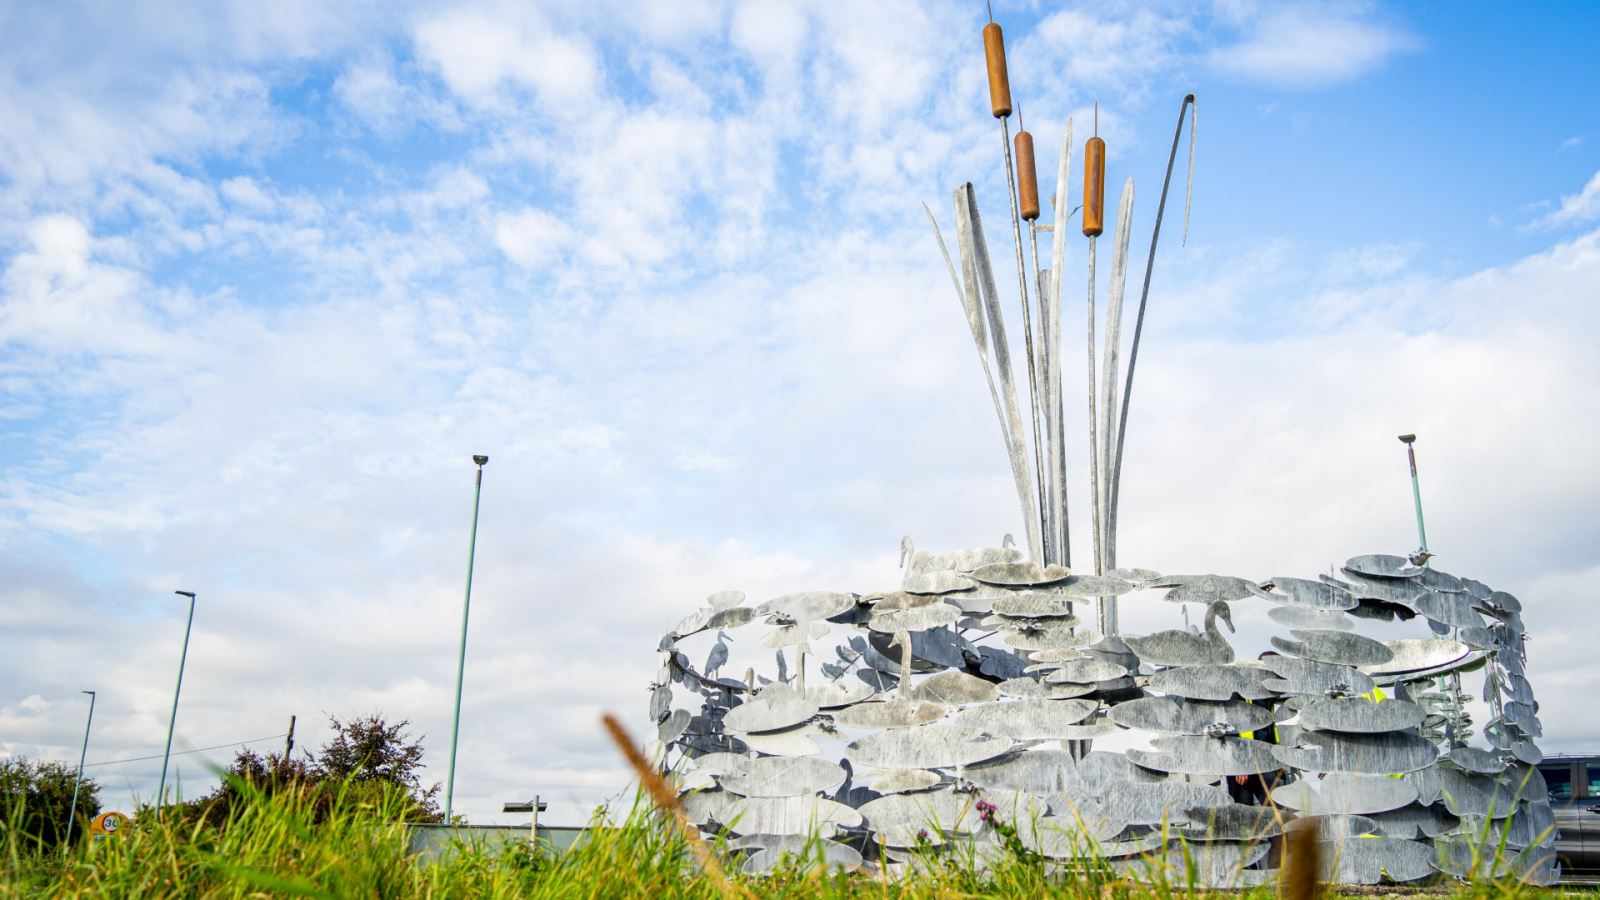 WWT Slimbridge Wetland Centre’s 'Nest' Sculpture